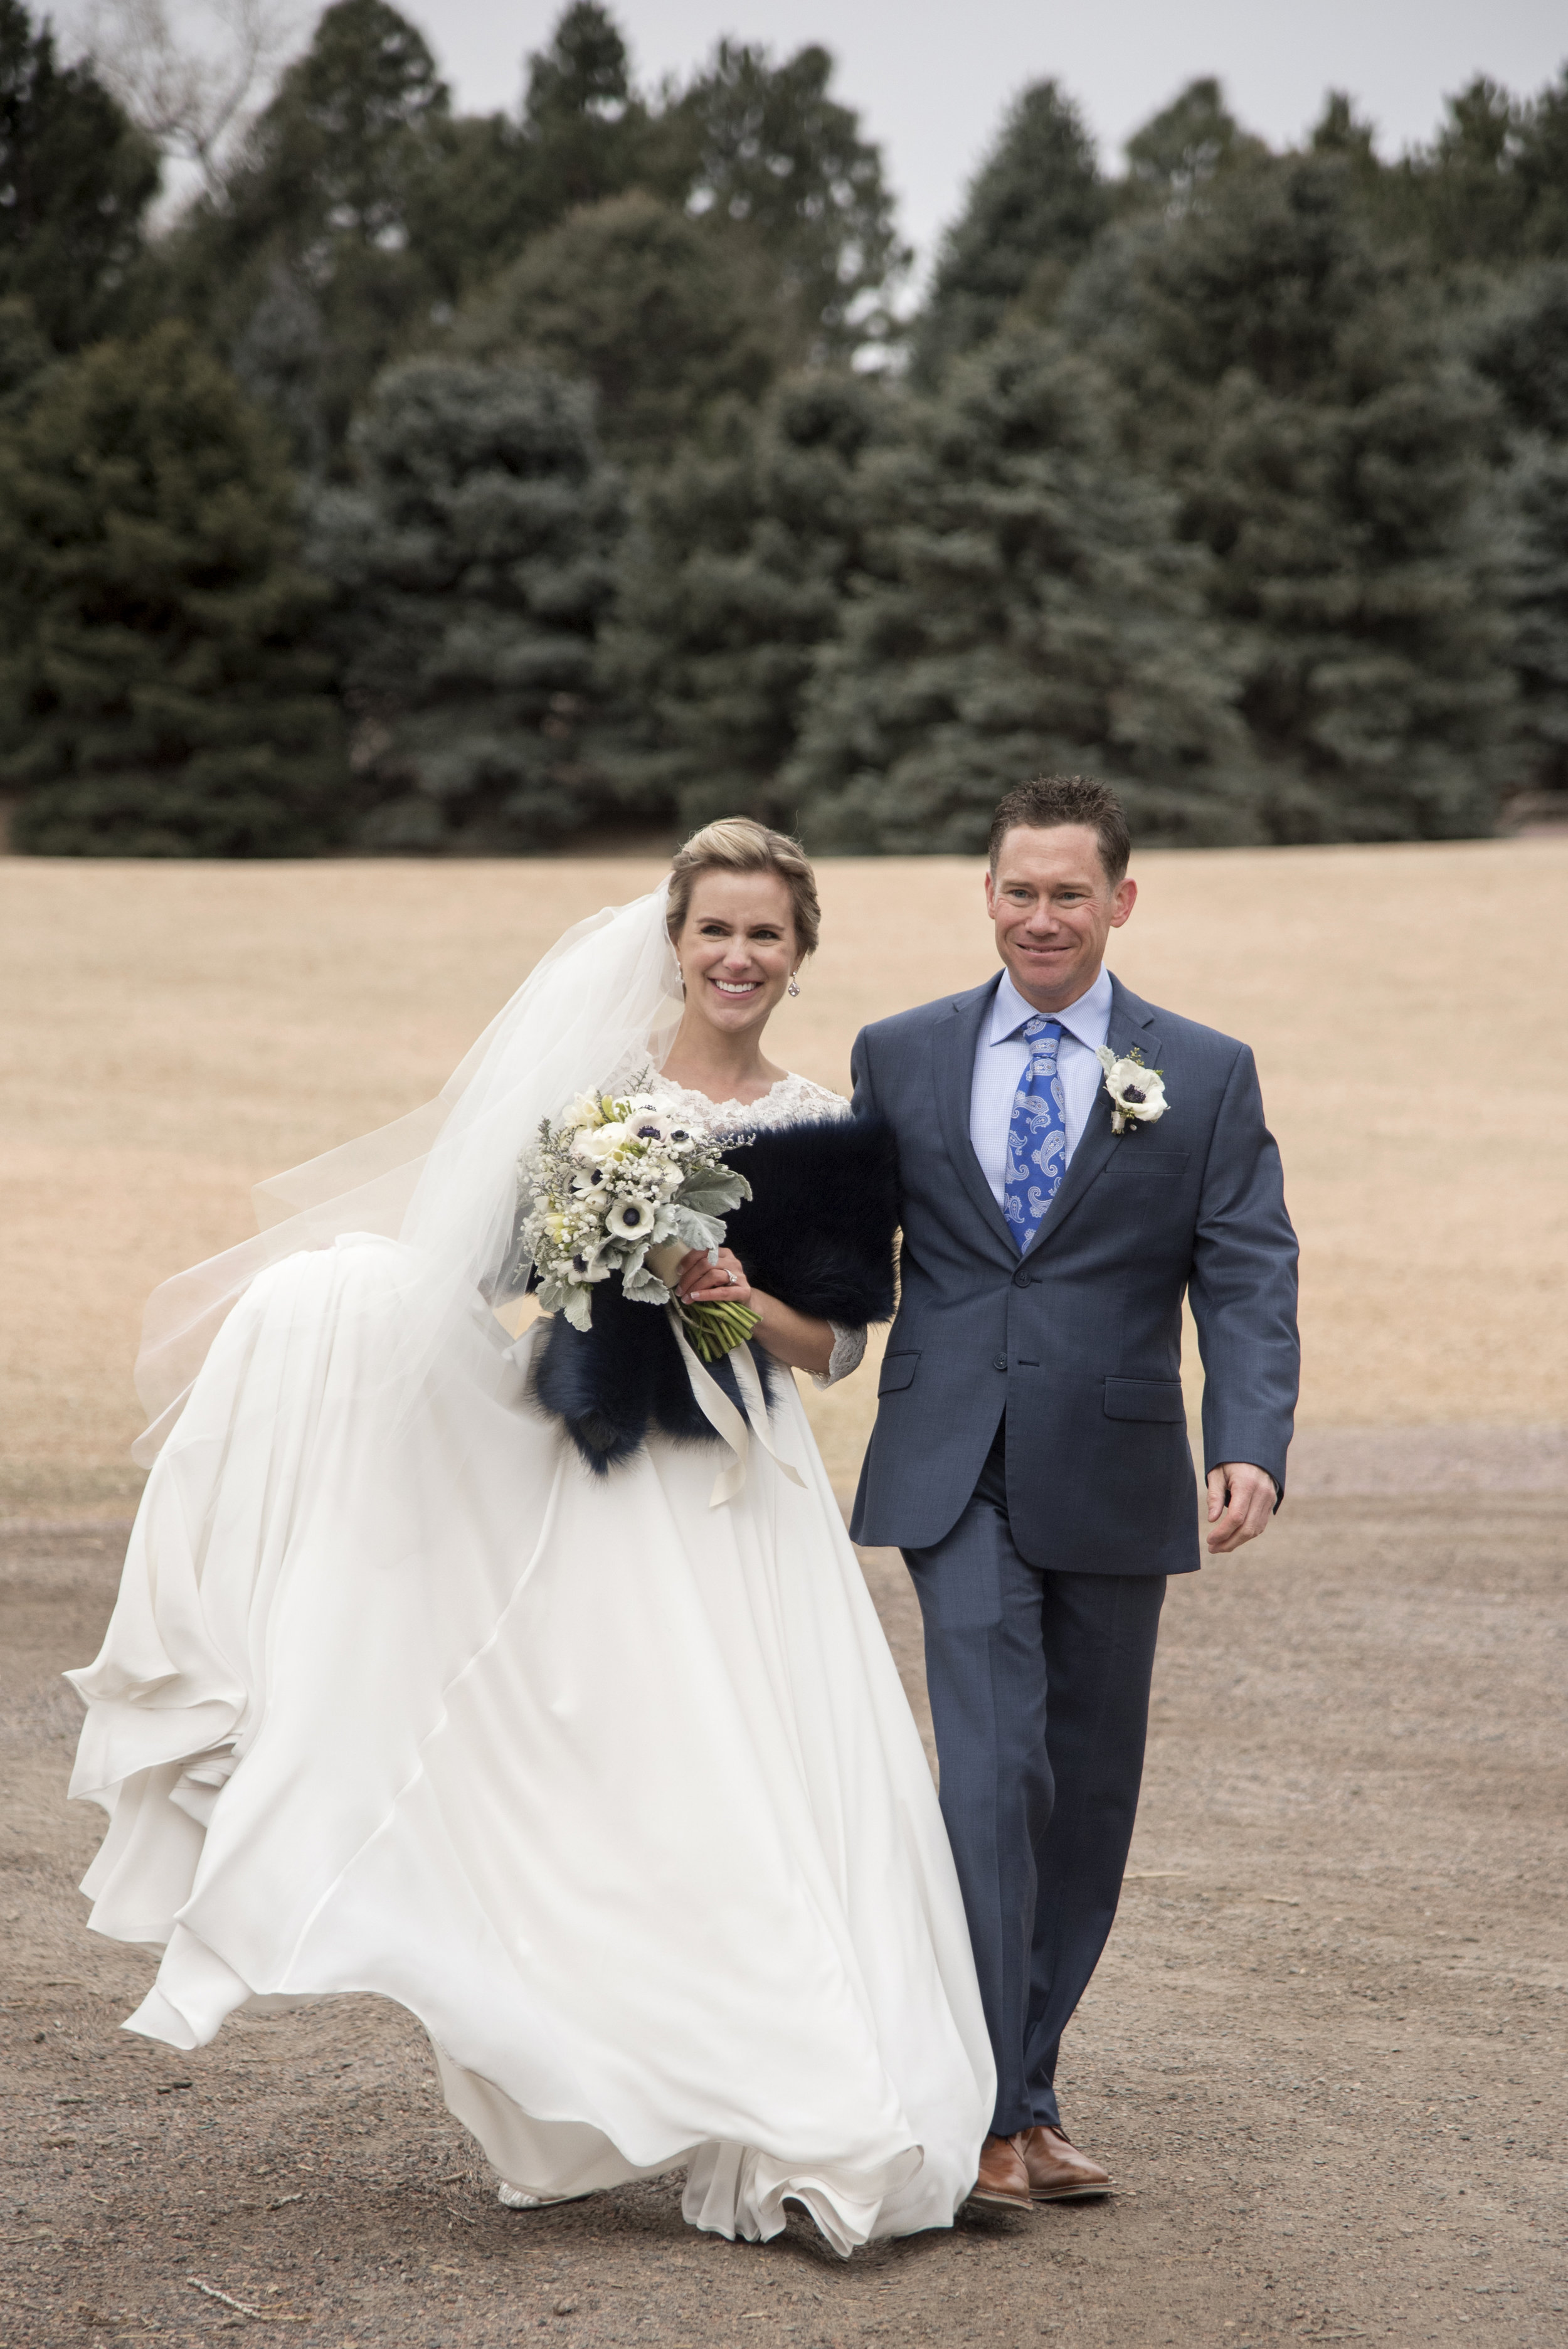 Bride and Groom walking arm in arm | Mary and Brad's Outdoor Wedding at Hudson Gardens | Colorado Springs, Colorado Photographer | Farm Wedding Photographer | Apollo Fields Wedding Photojournalism